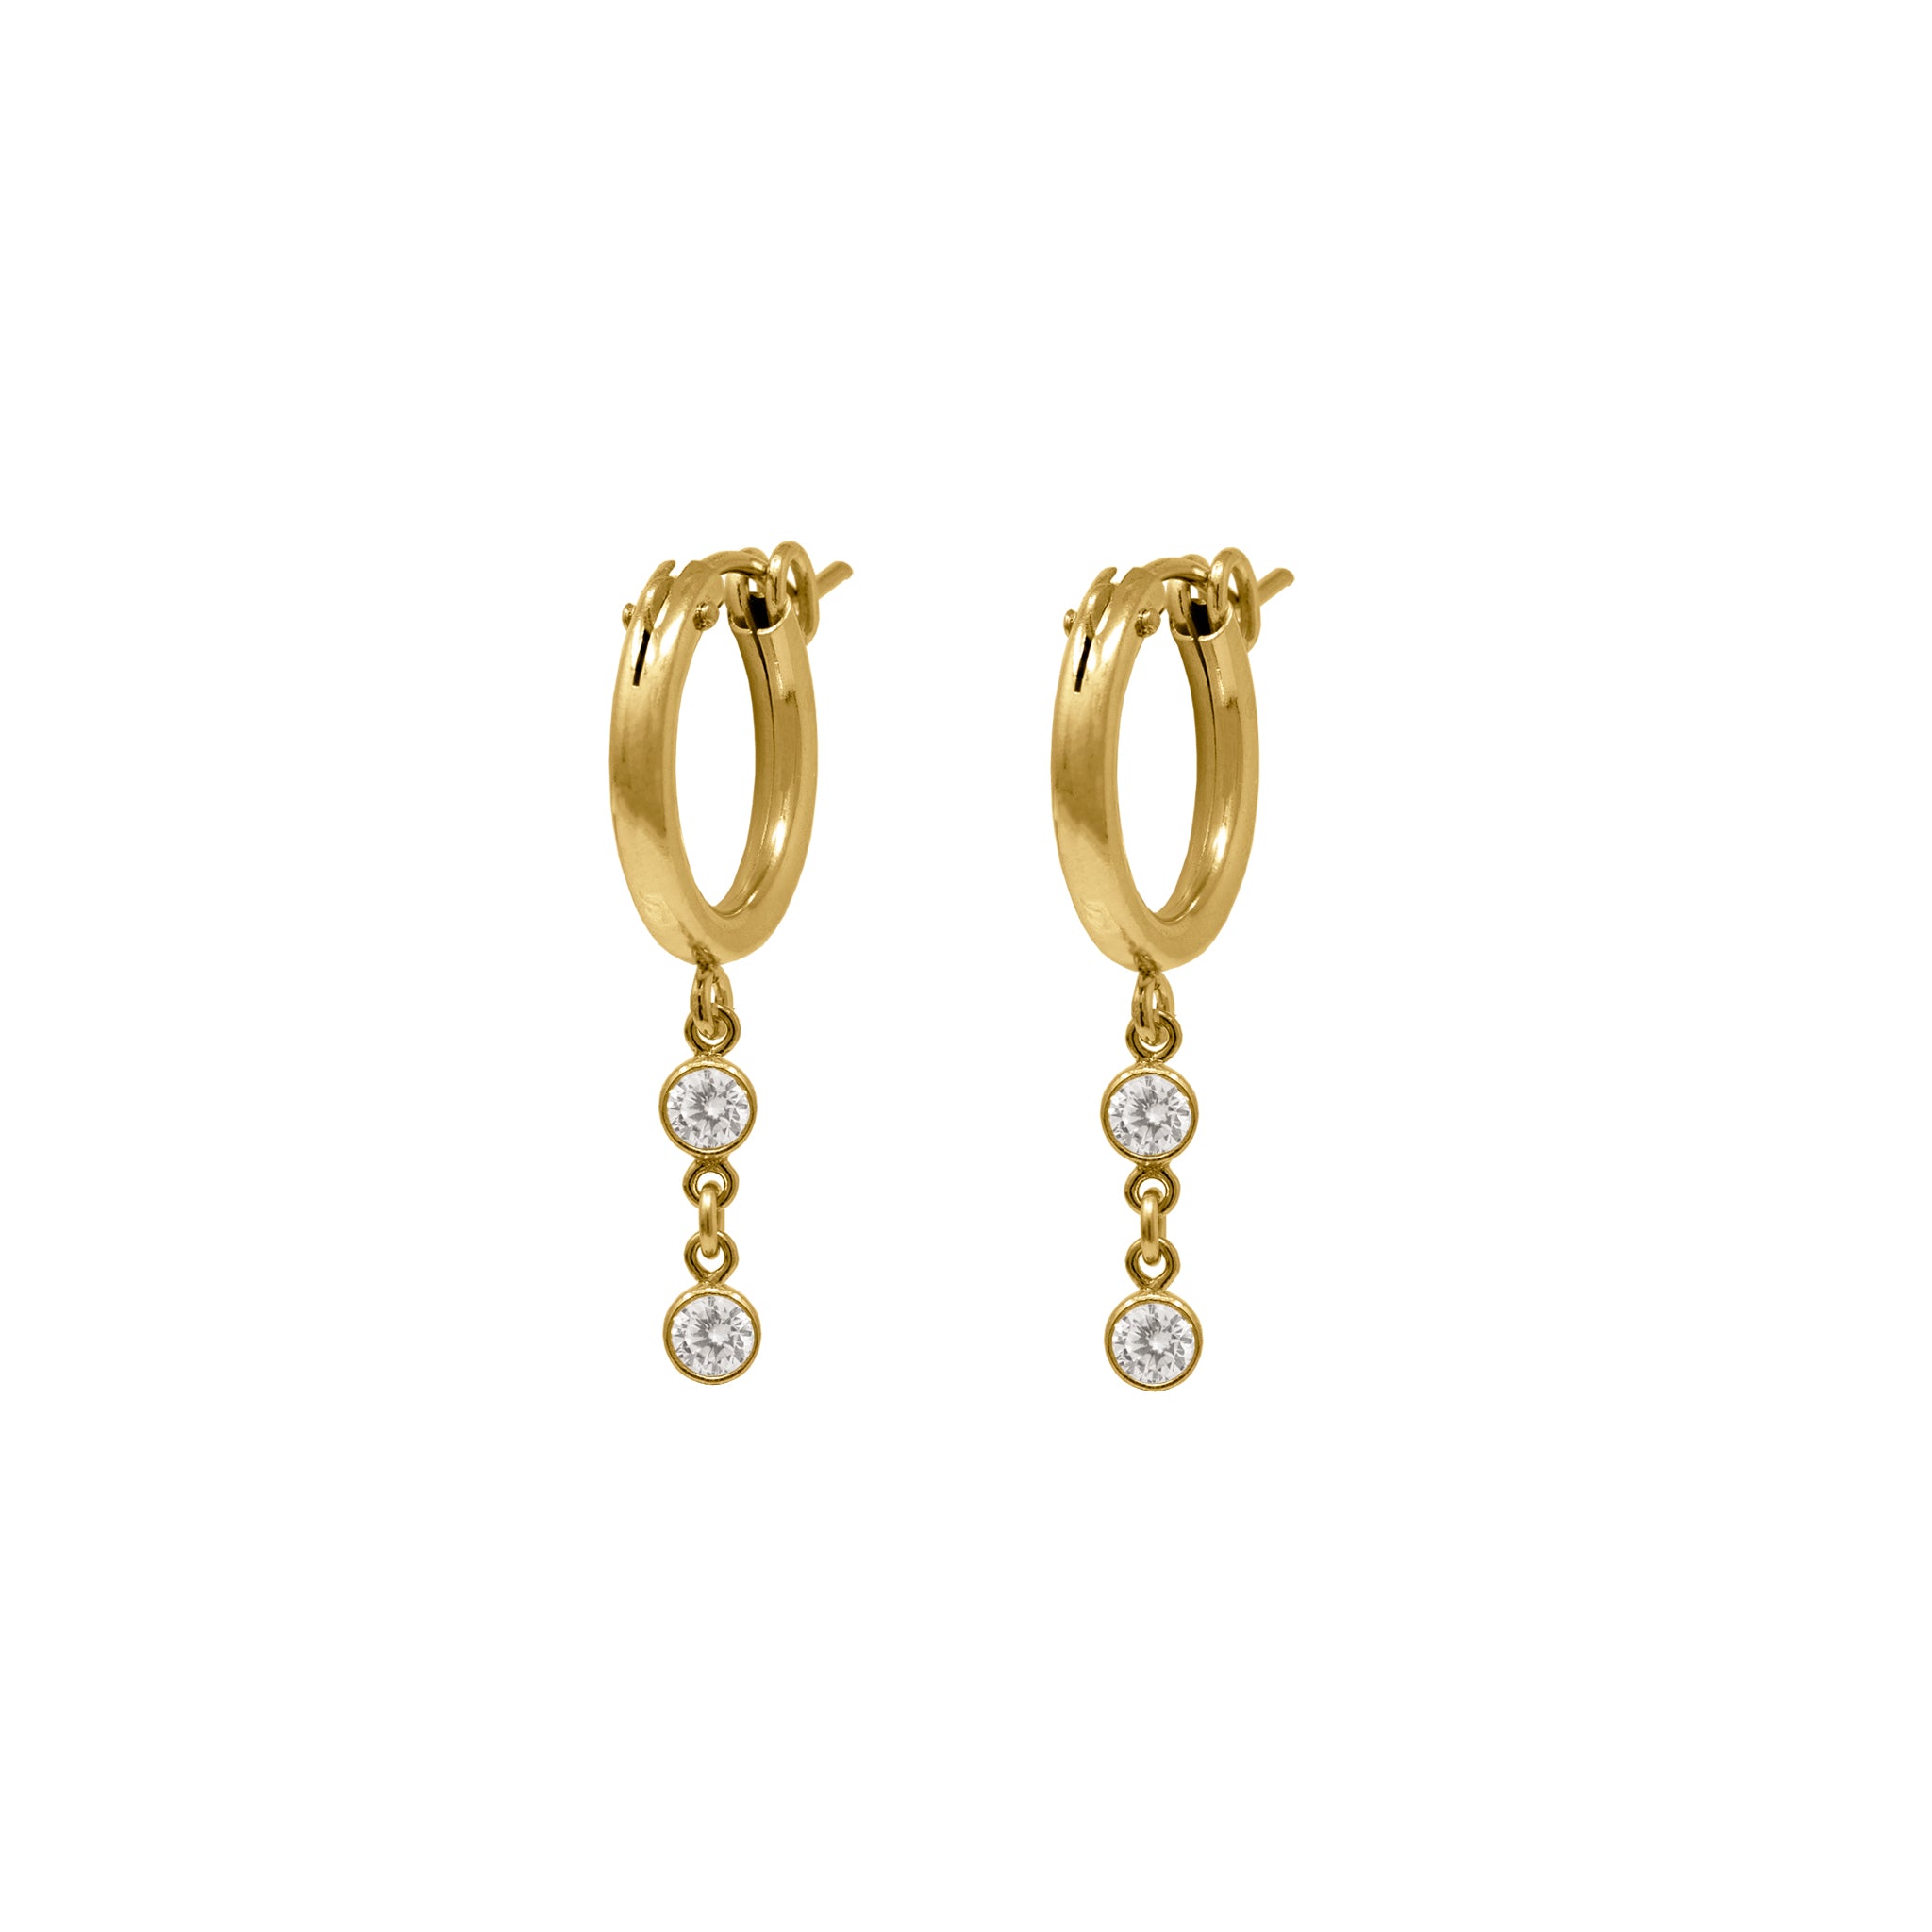 Gold cz drop and dangle earrings